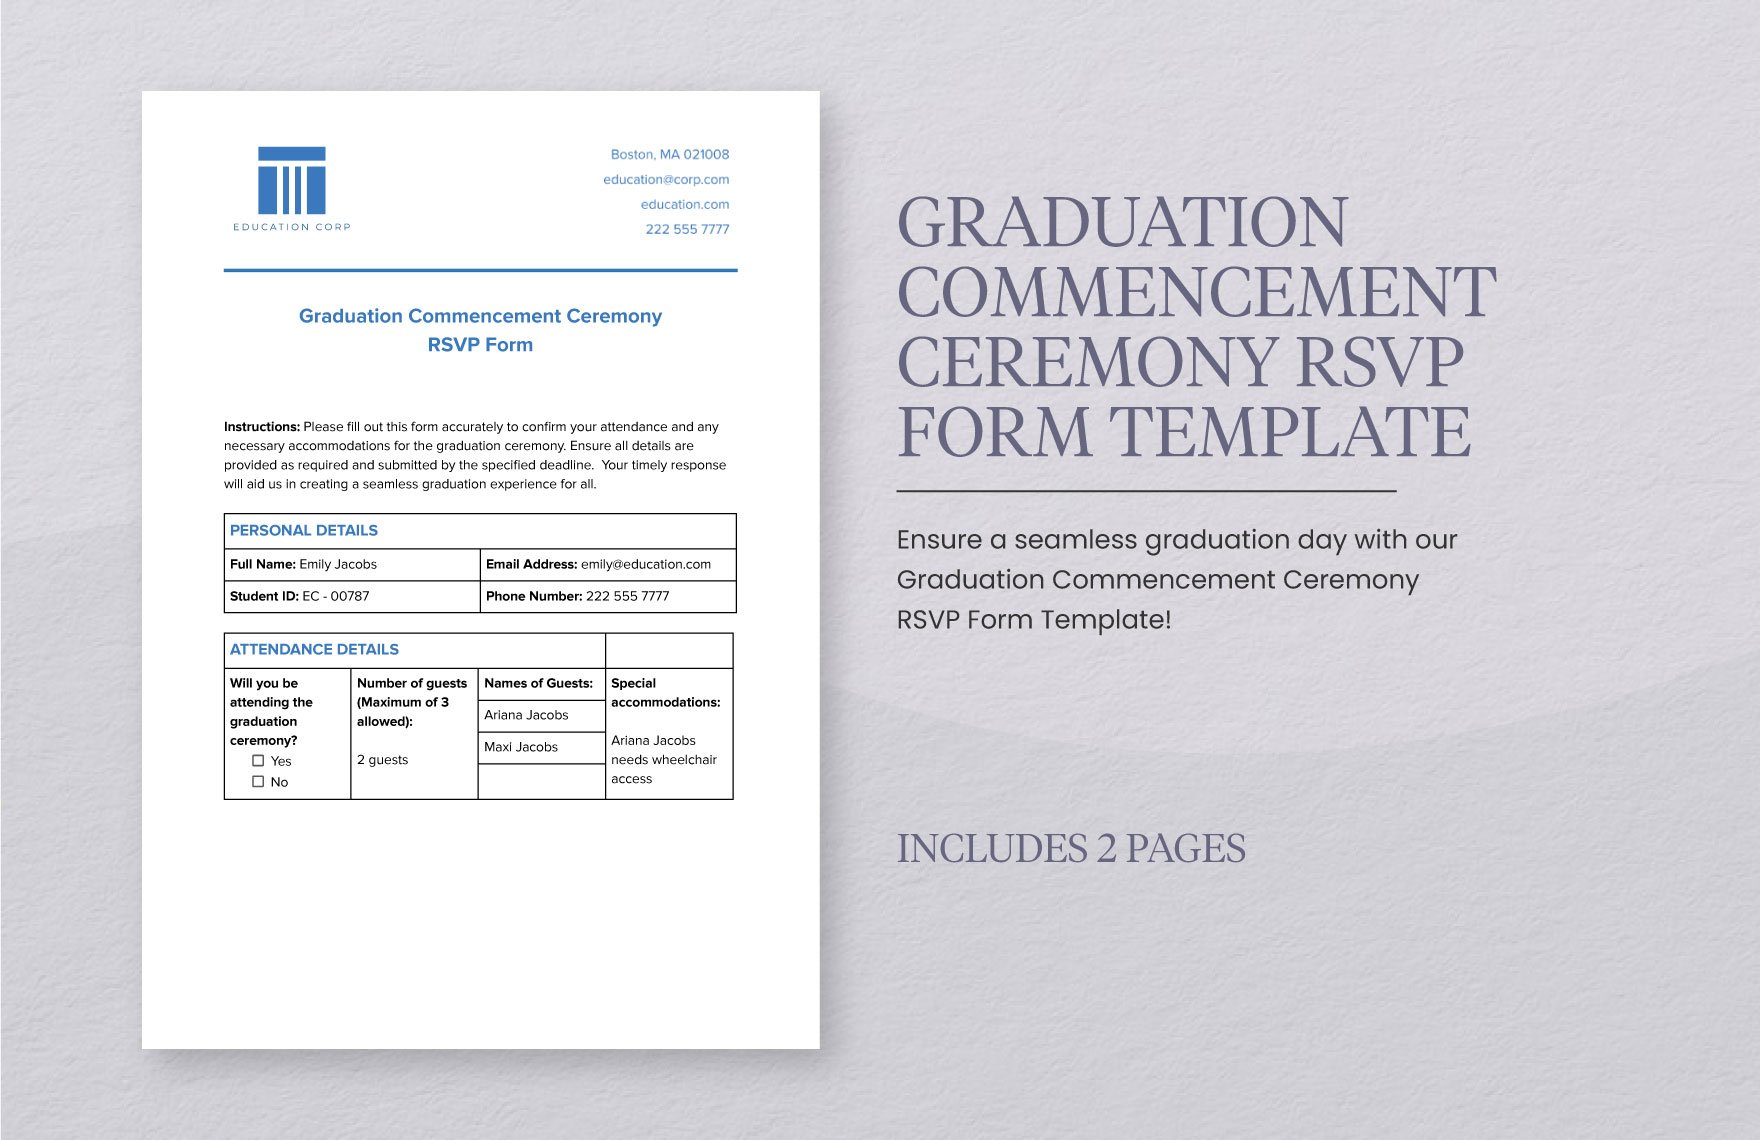 Graduation Commencement Ceremony RSVP Form Template in Word, Google Docs, PDF